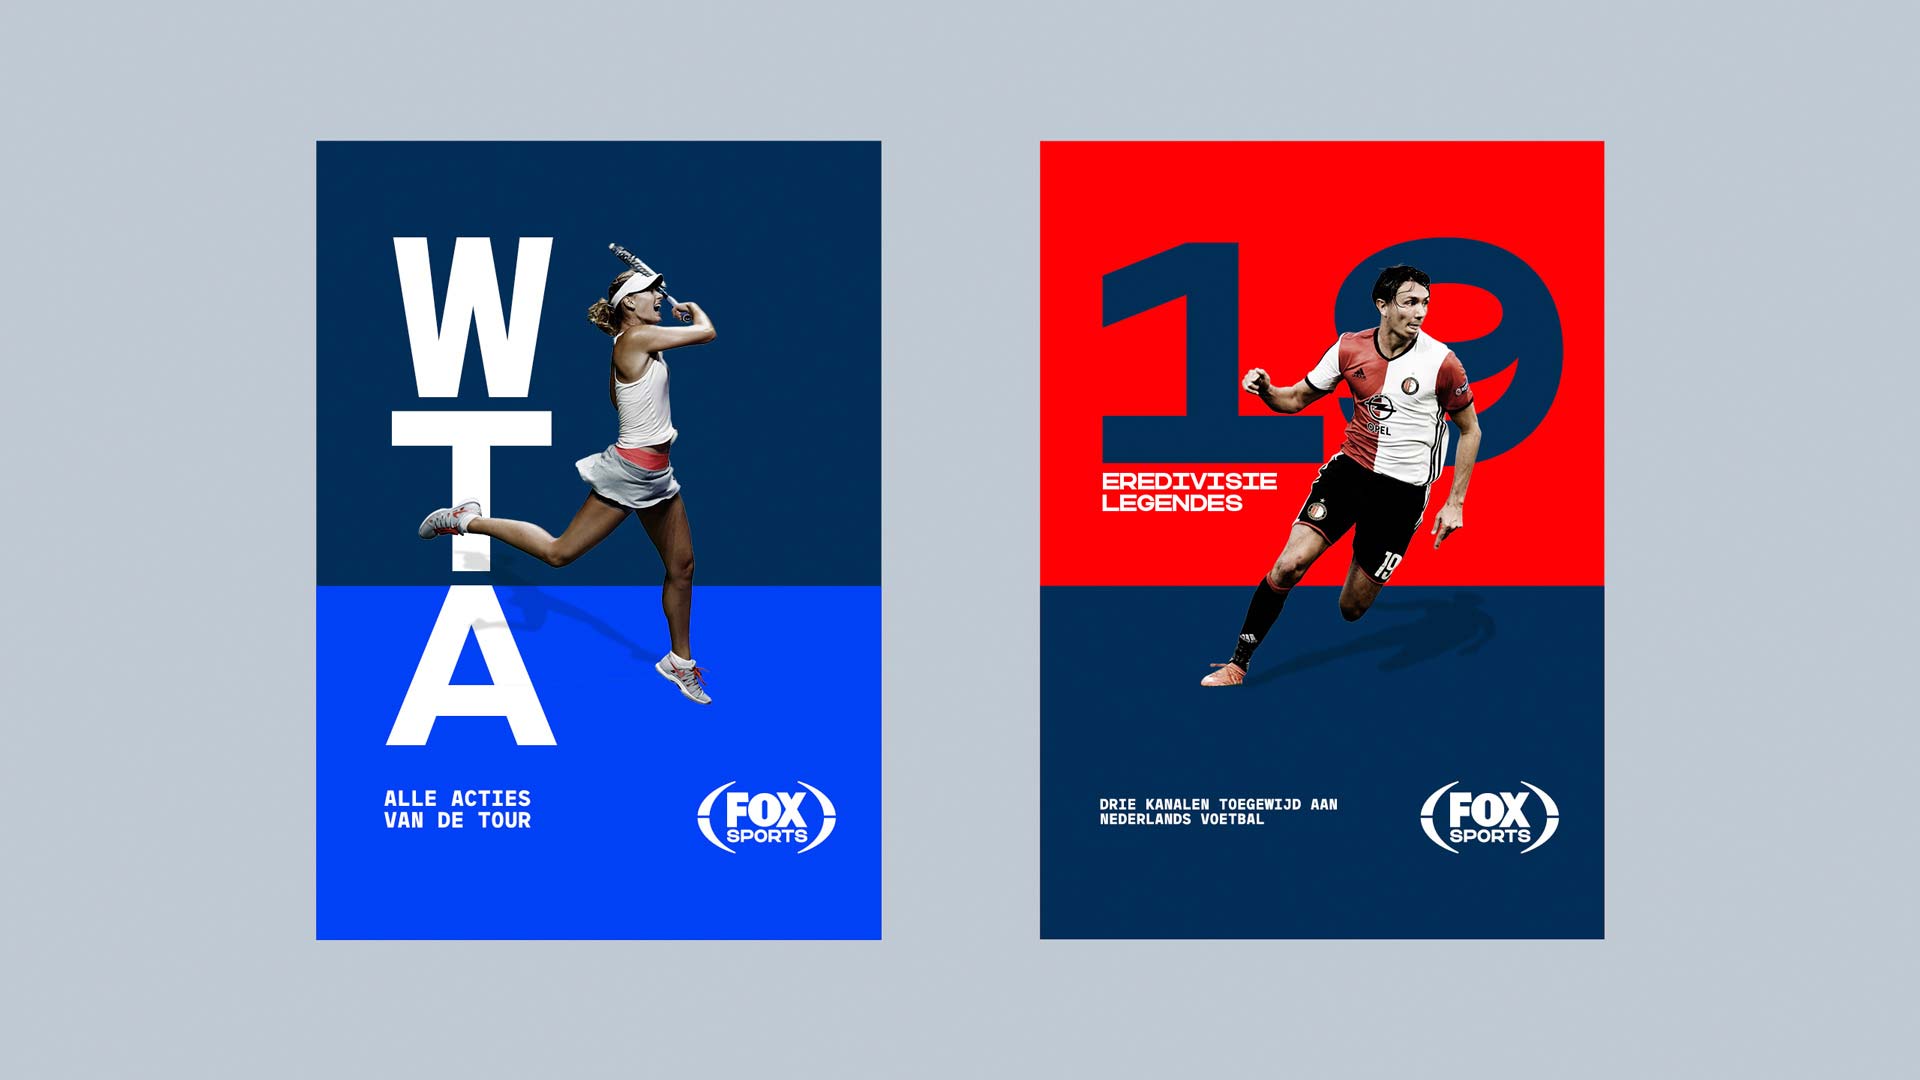 Custom Fonts: Fox Sports Netherlands